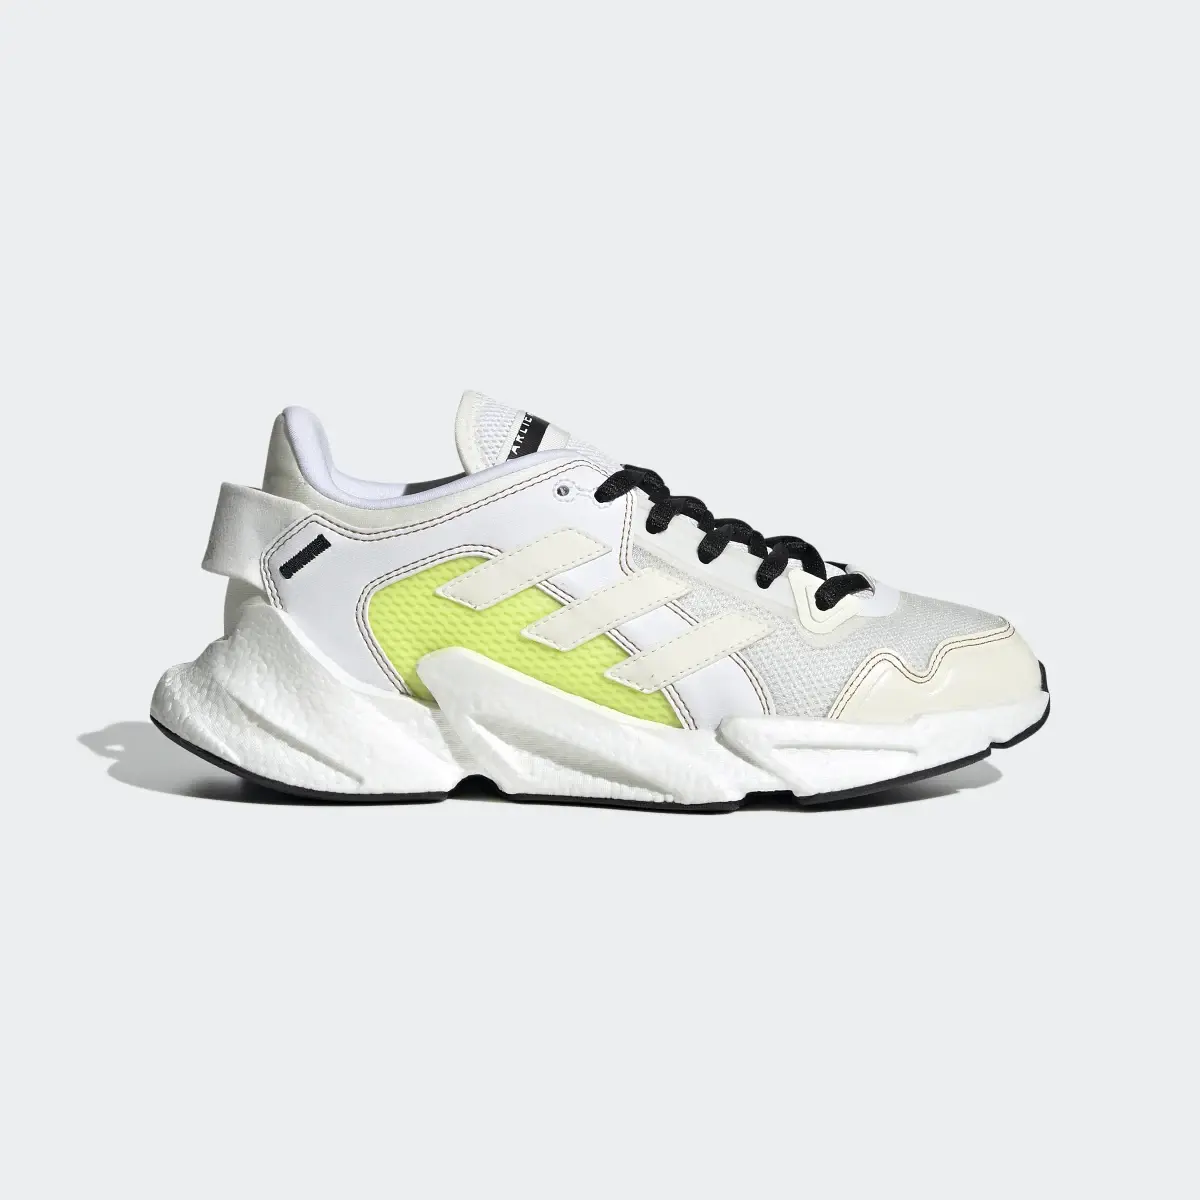 Adidas Karlie Kloss X9000 Shoes. 2